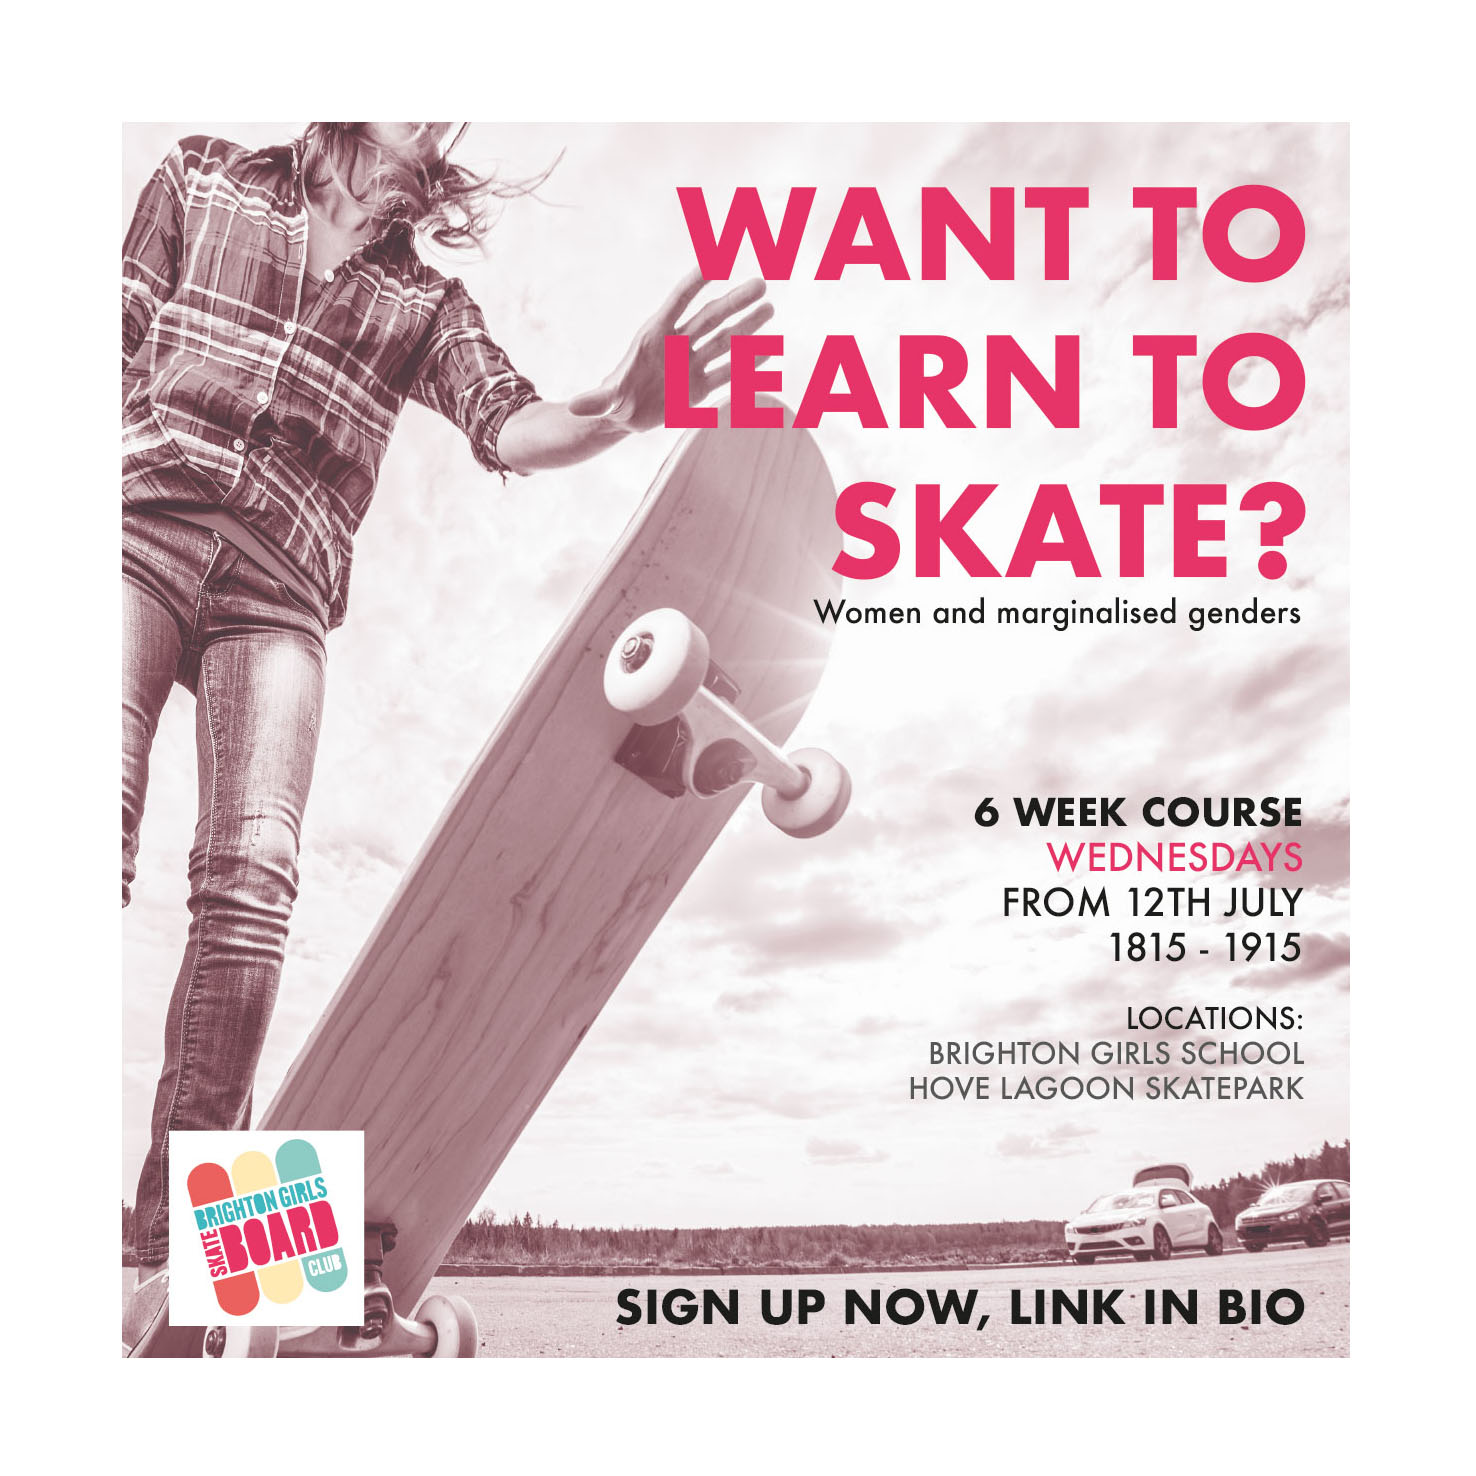 Partnership: 6 Week Skate Course